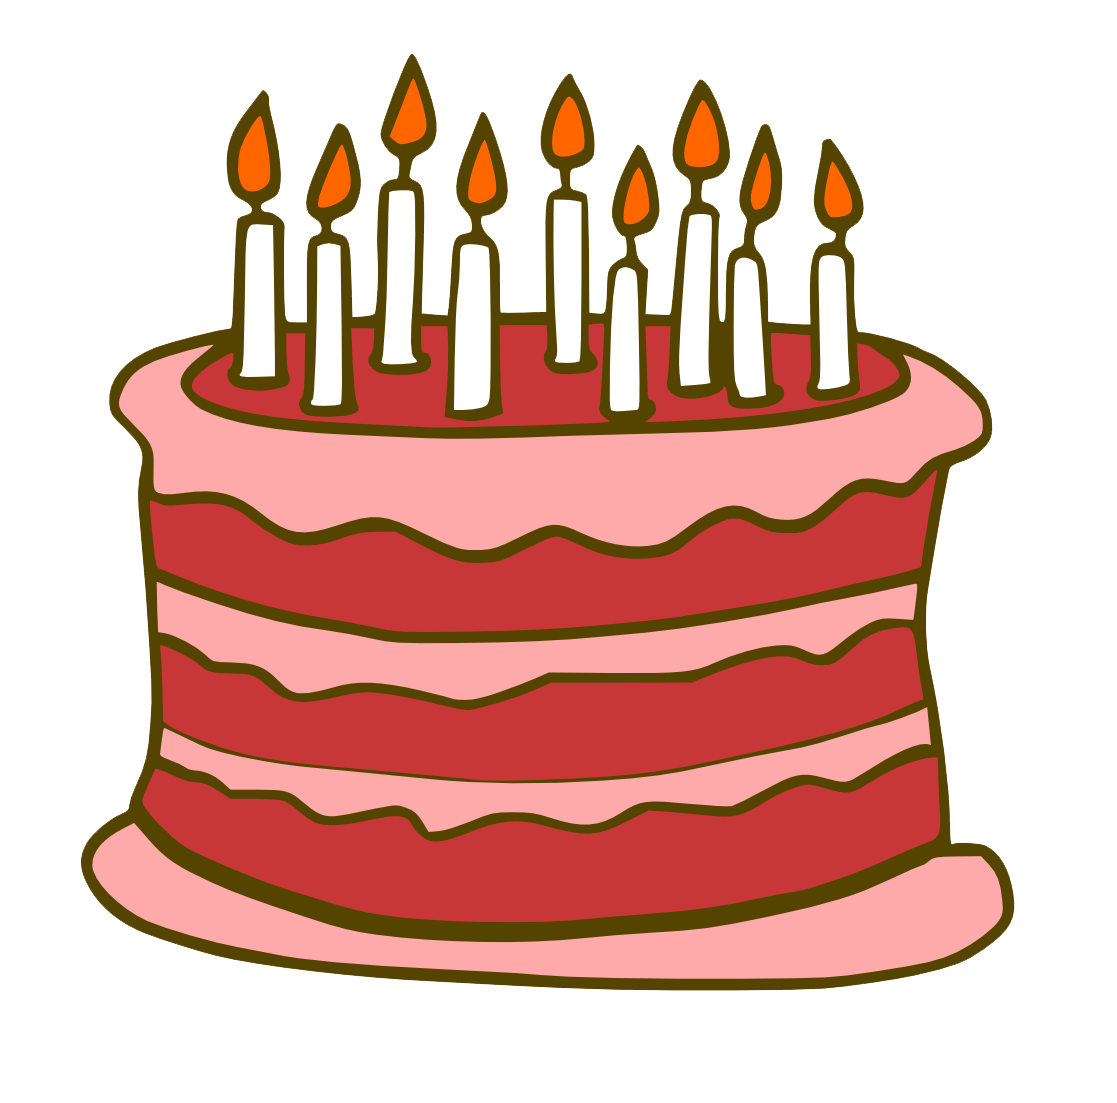 Free Birthday Cake PNG Transparent Images, Download Free Birthday Cake